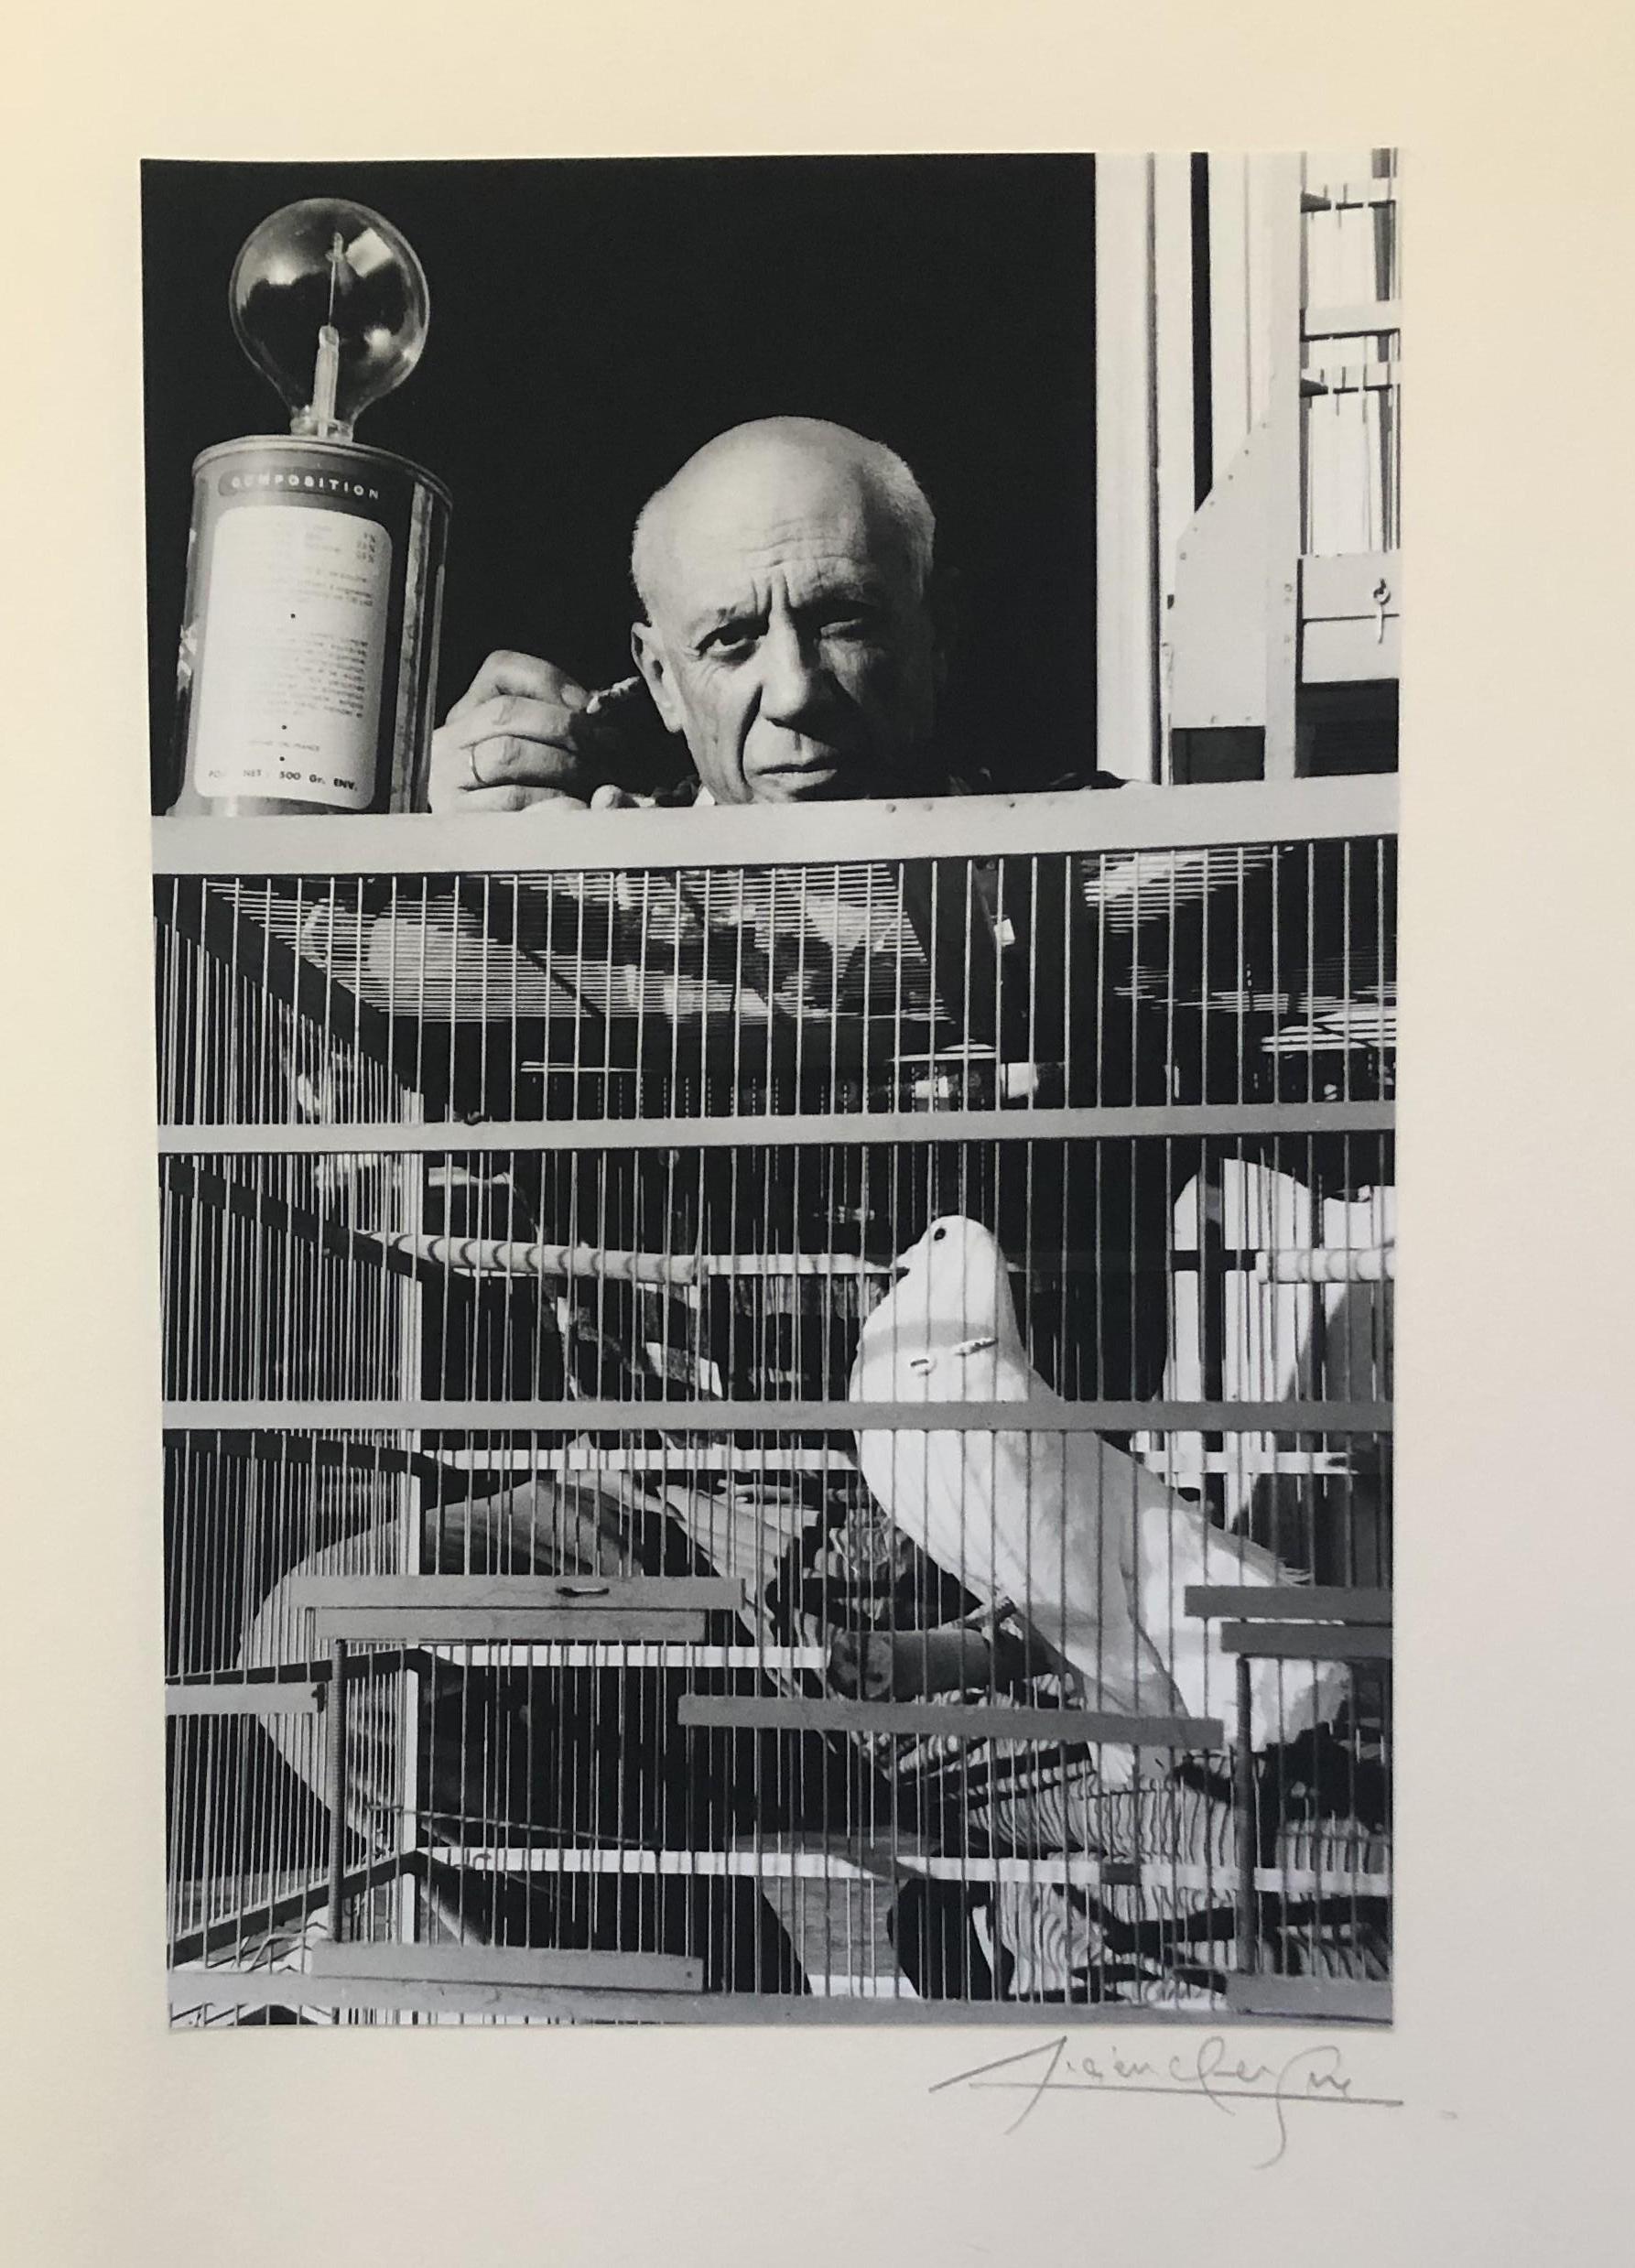 5 Photographies (Picasso's portraits) by Lucien Clergue - 30 copies For Sale 2